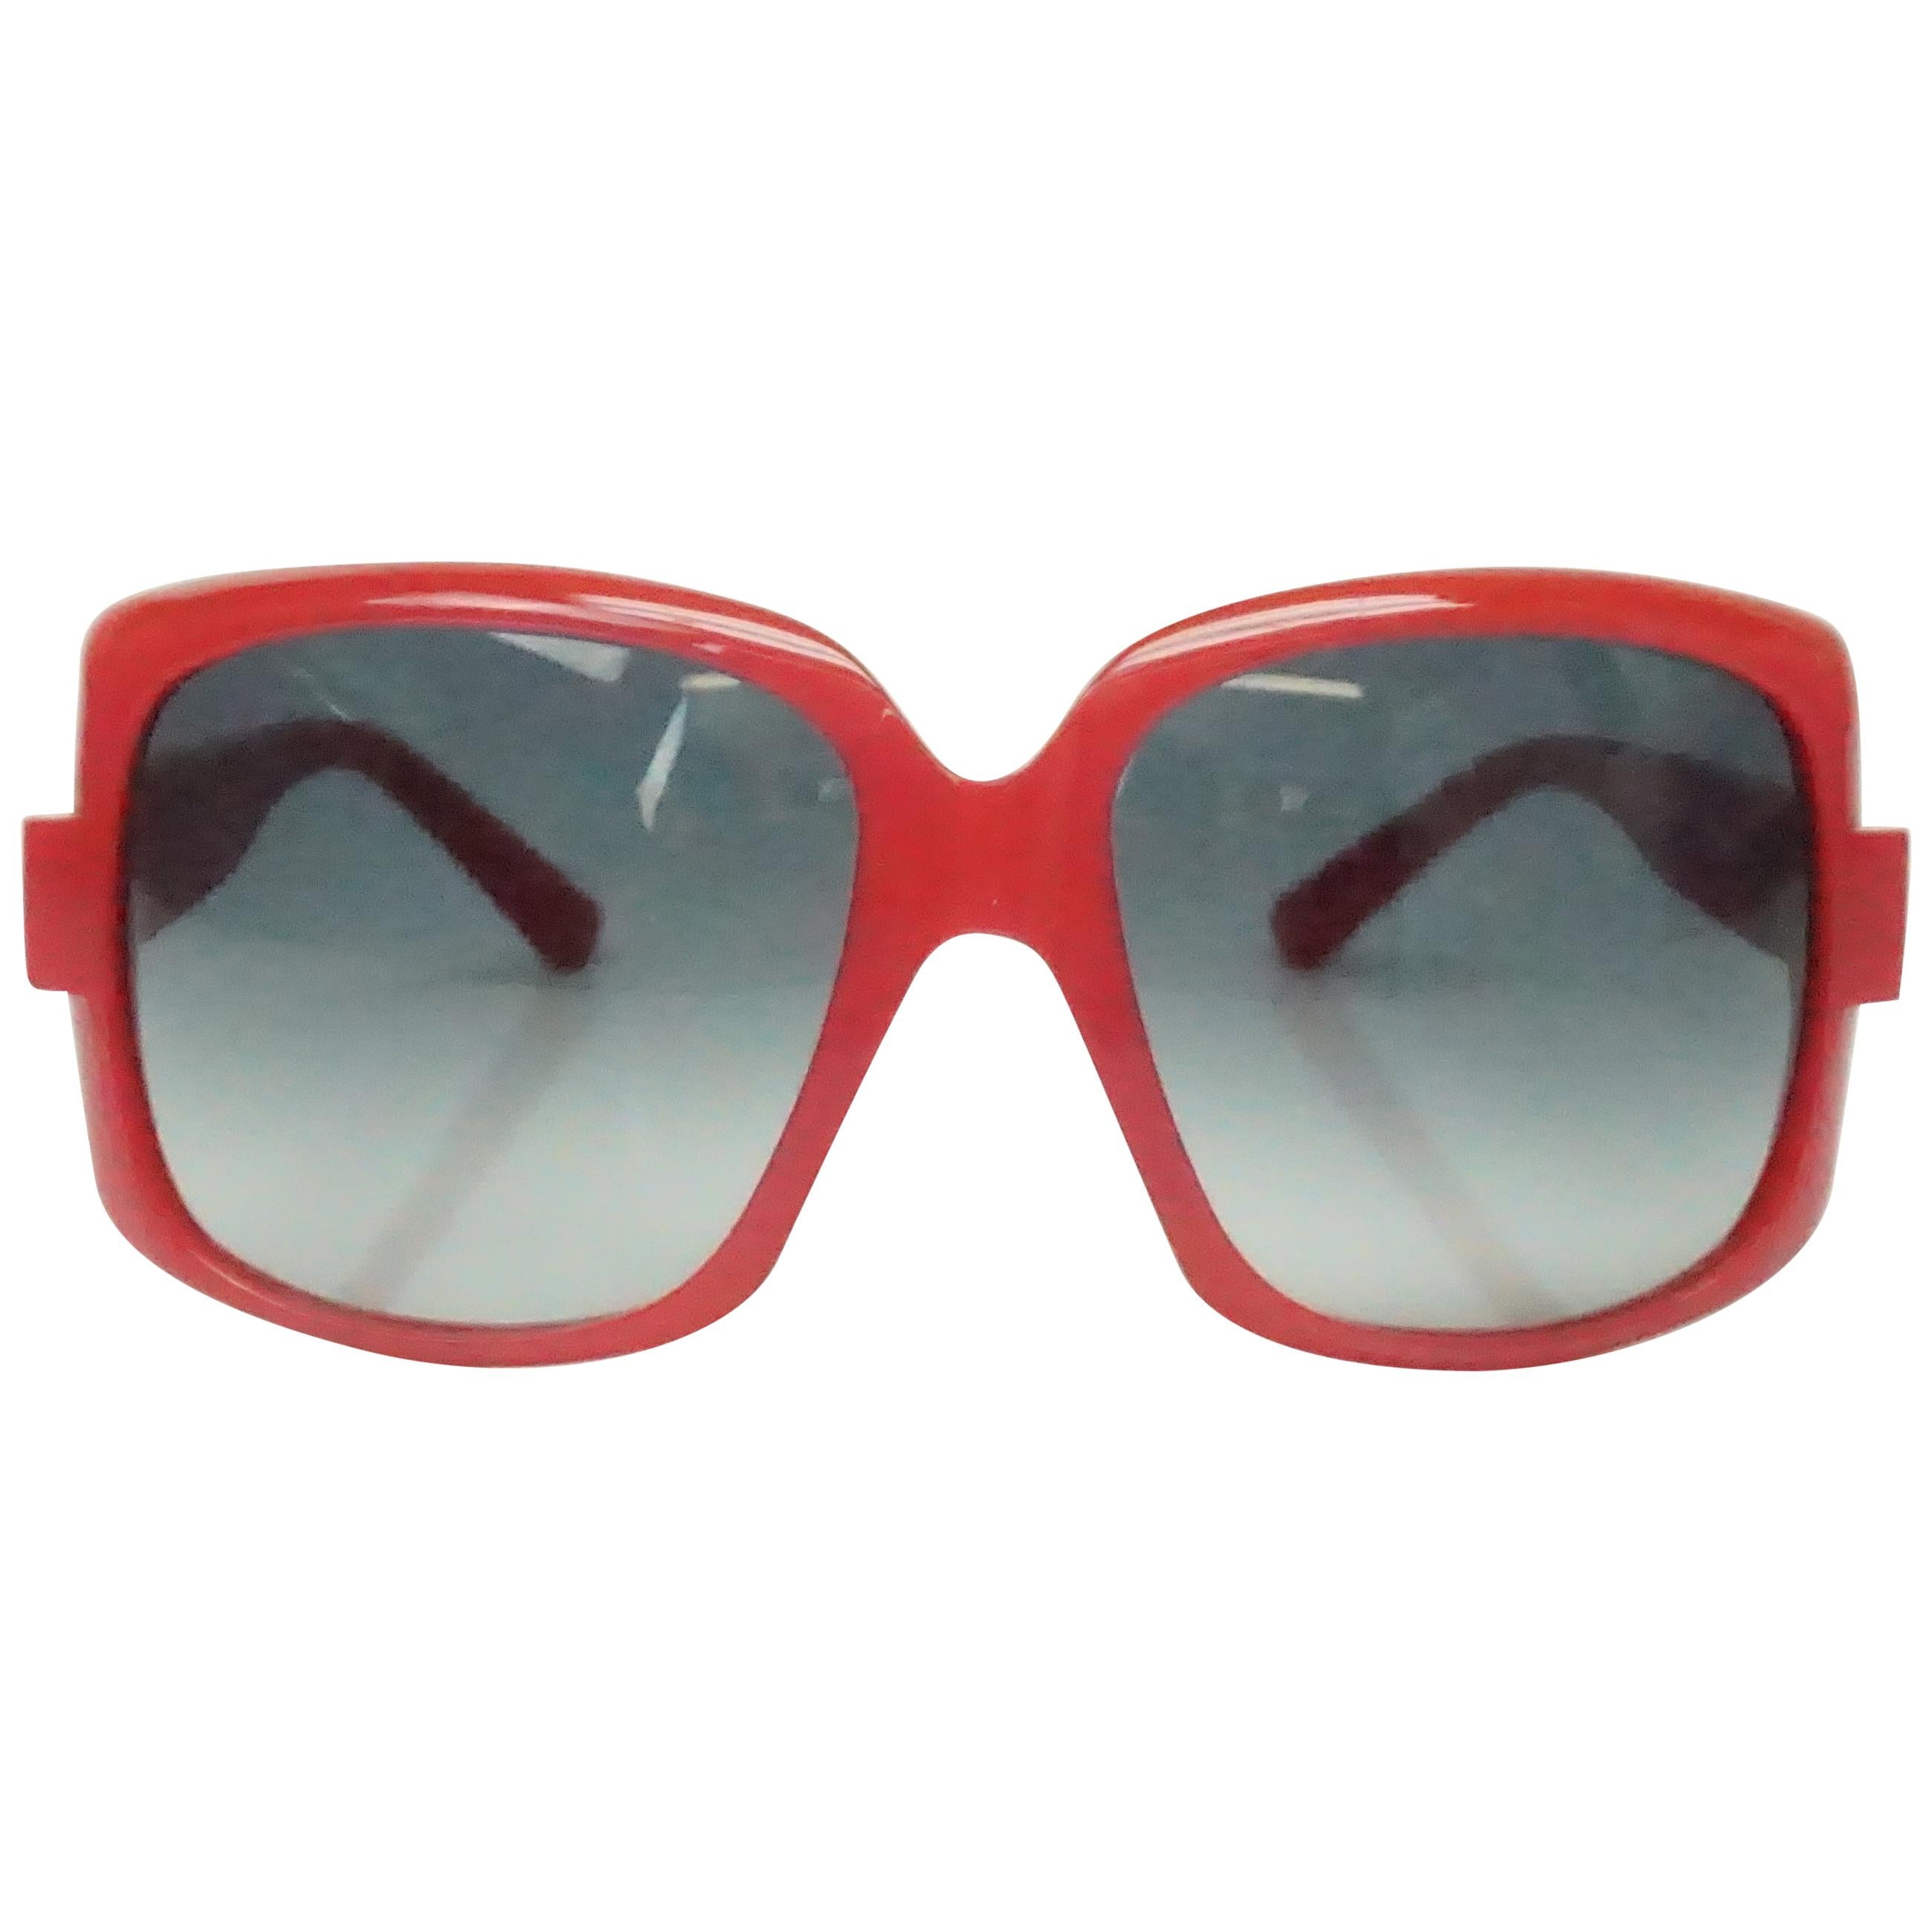 christian dior red sunglasses